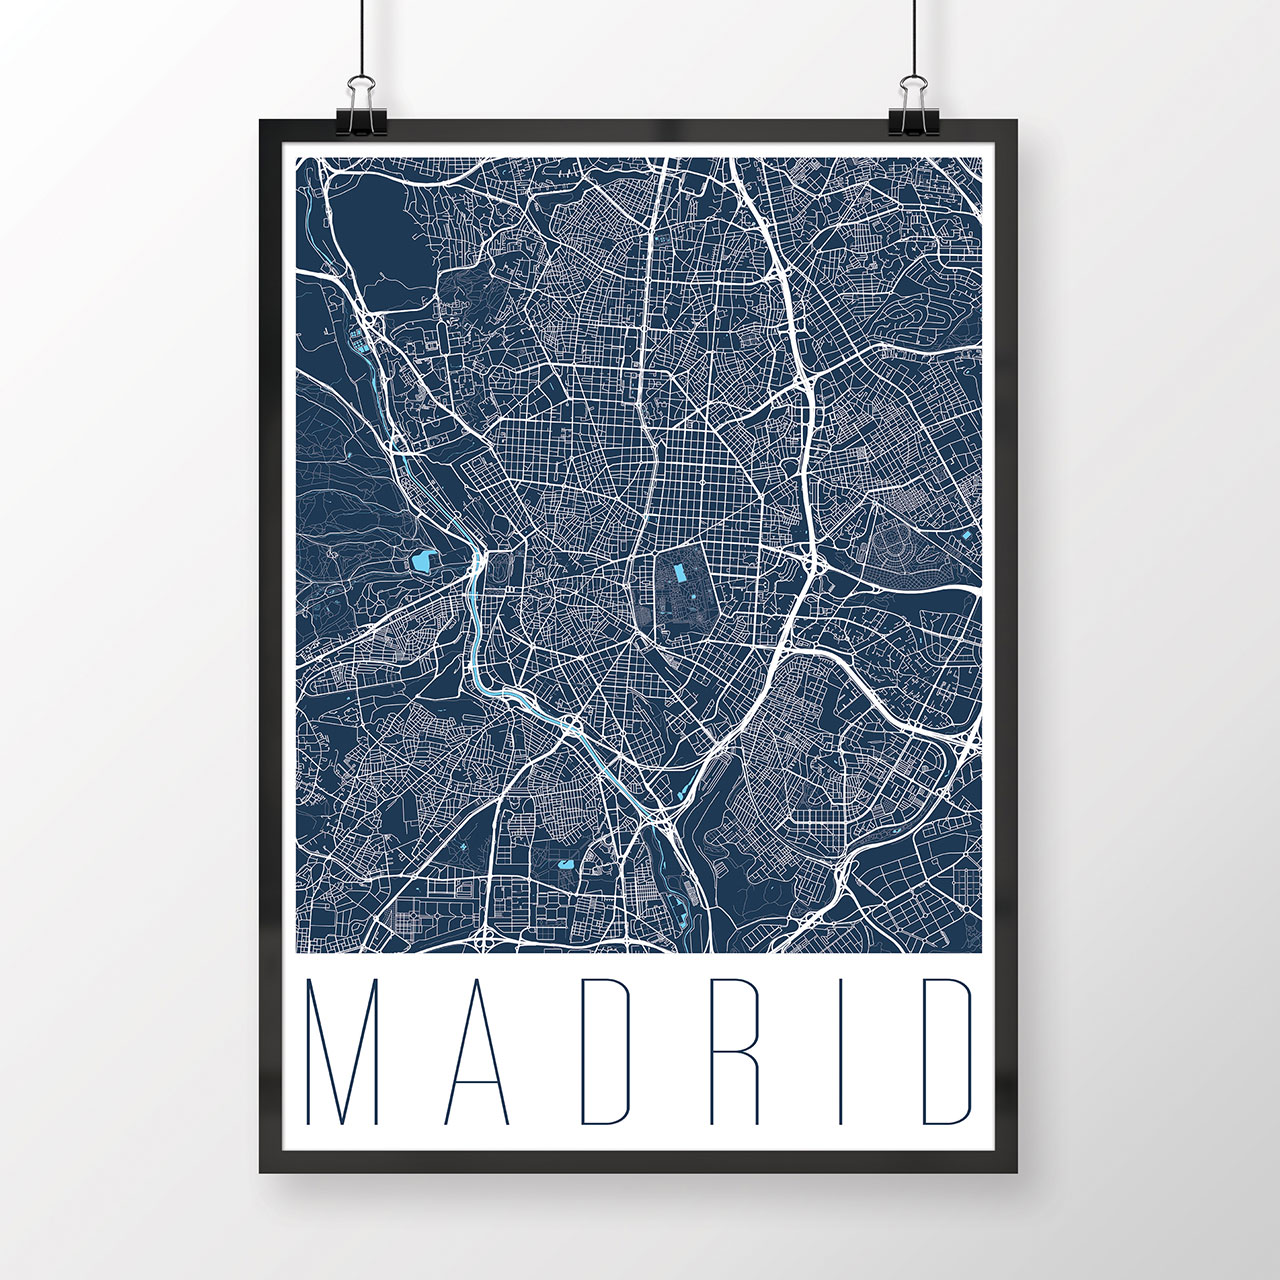 MADRID, moderný, tmavomodrý